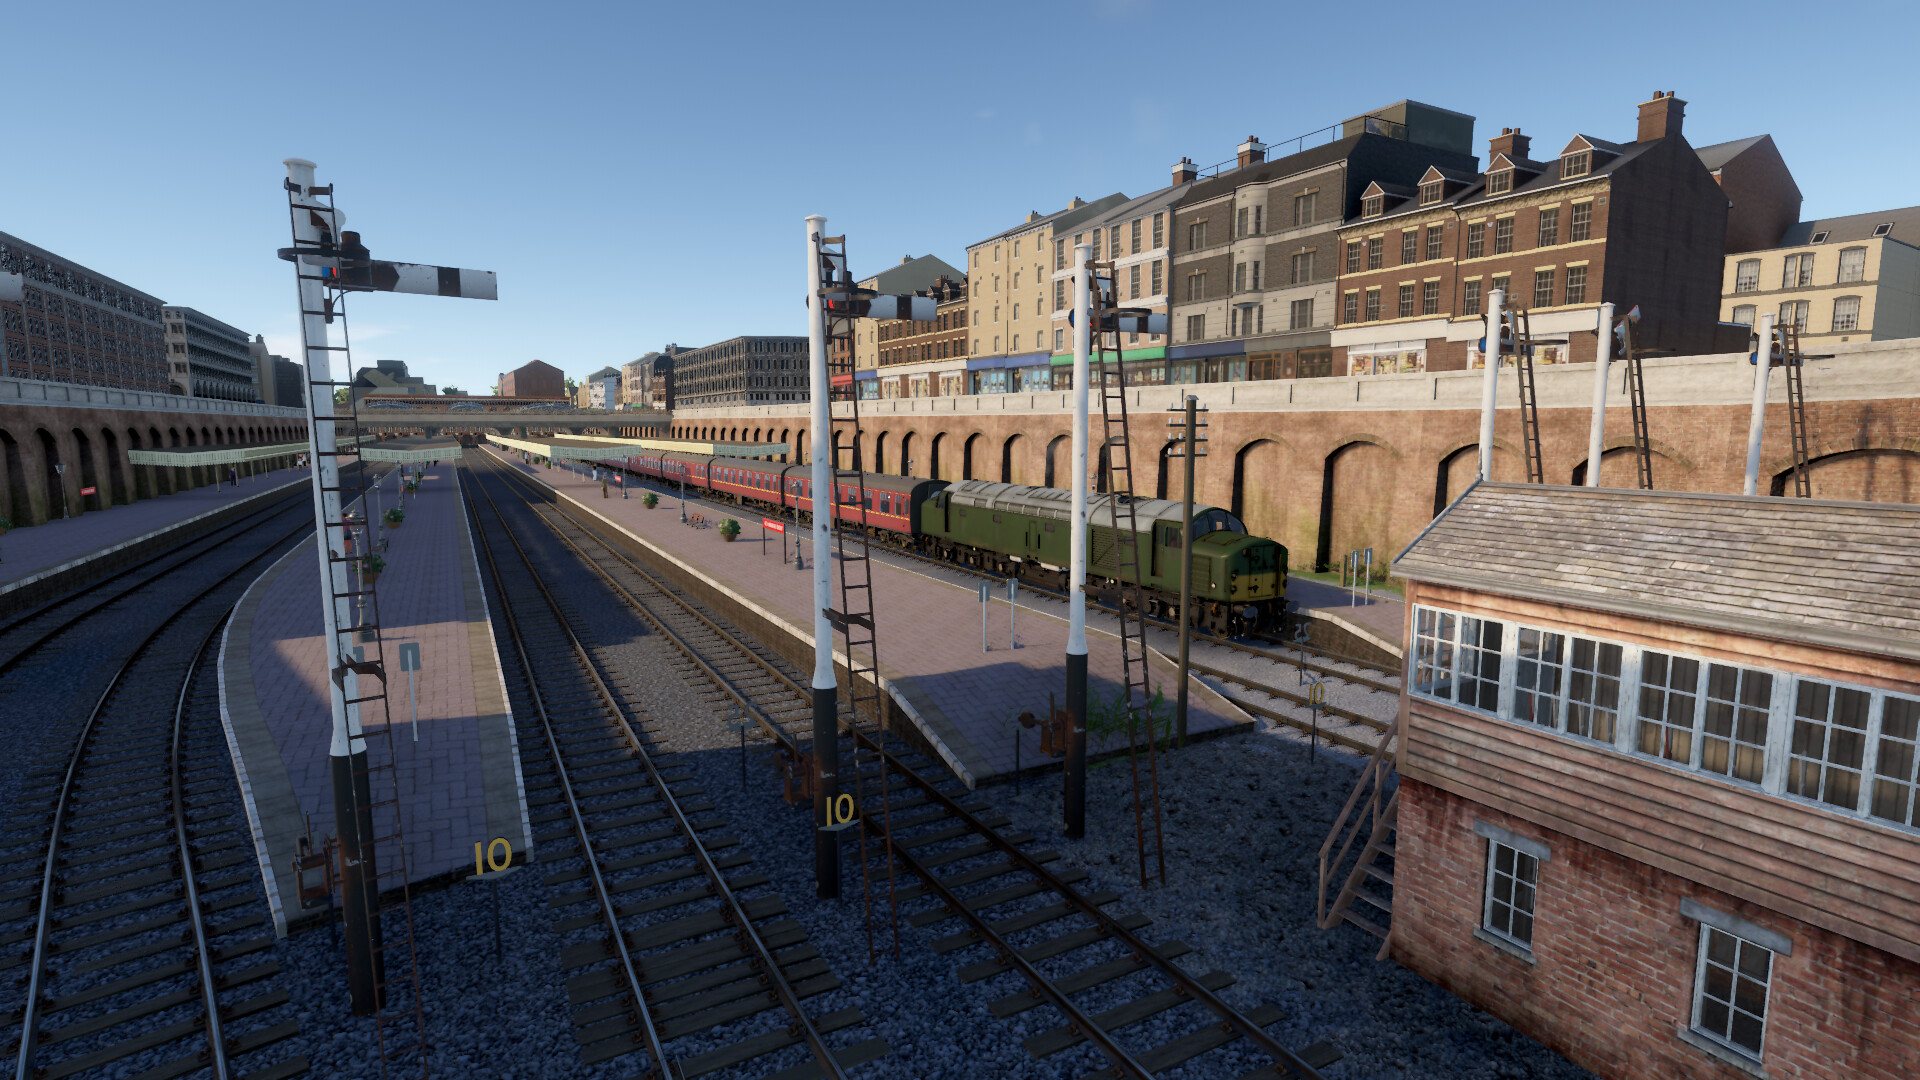 Train Simulator 2015 Tutorial - RailDriver Pt 2 - Advanced Topics